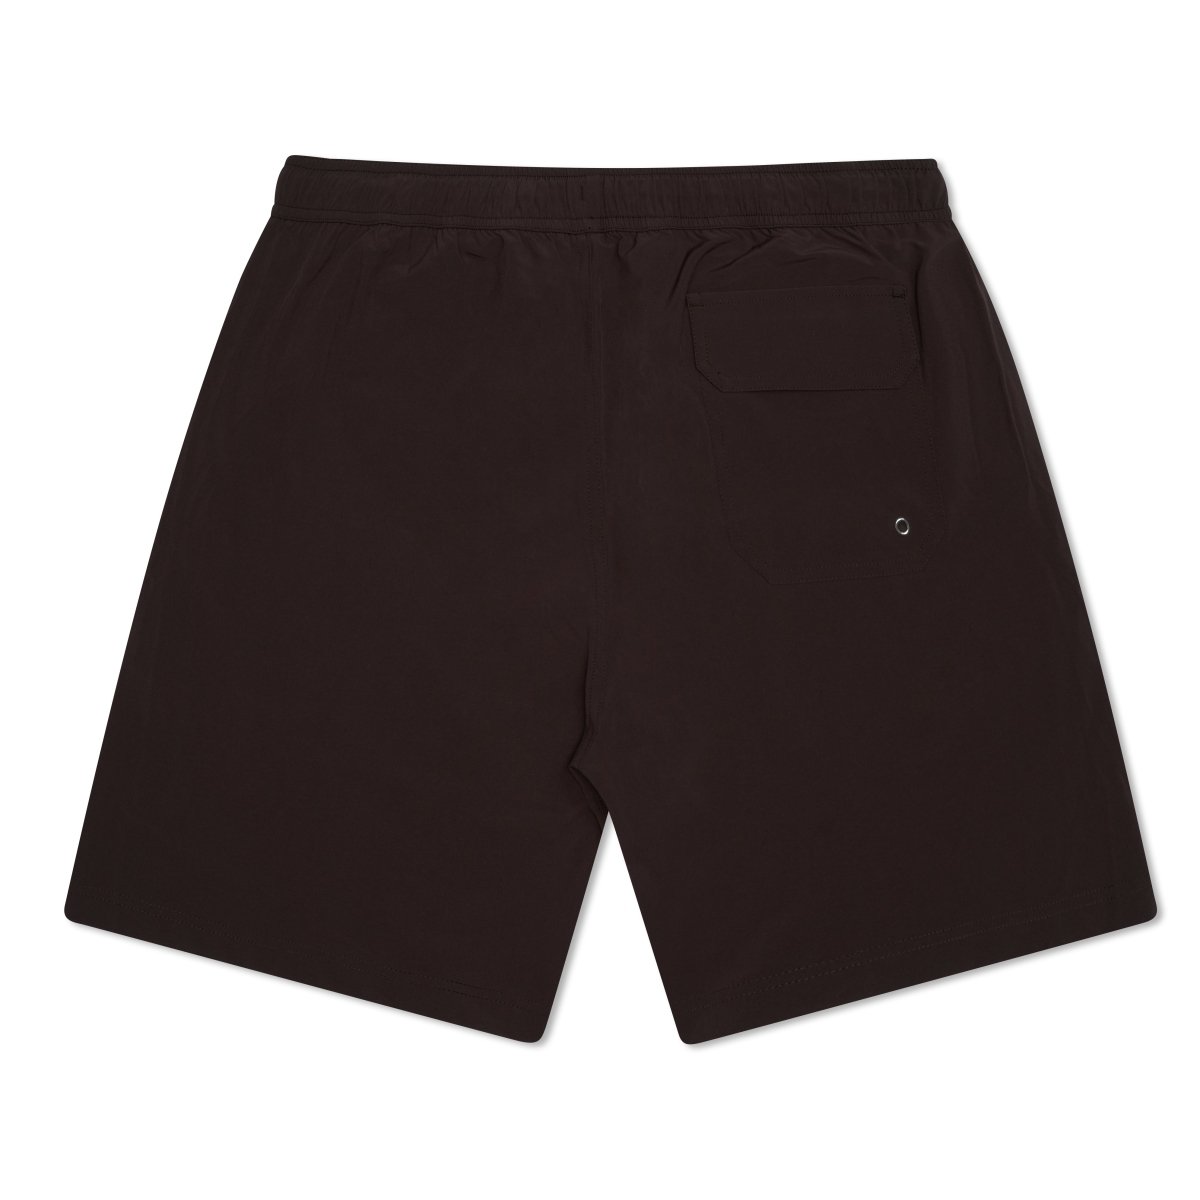 Tunnel Vision 7" - Brown Shorts - Bamboo Ave. - Men's Shorts